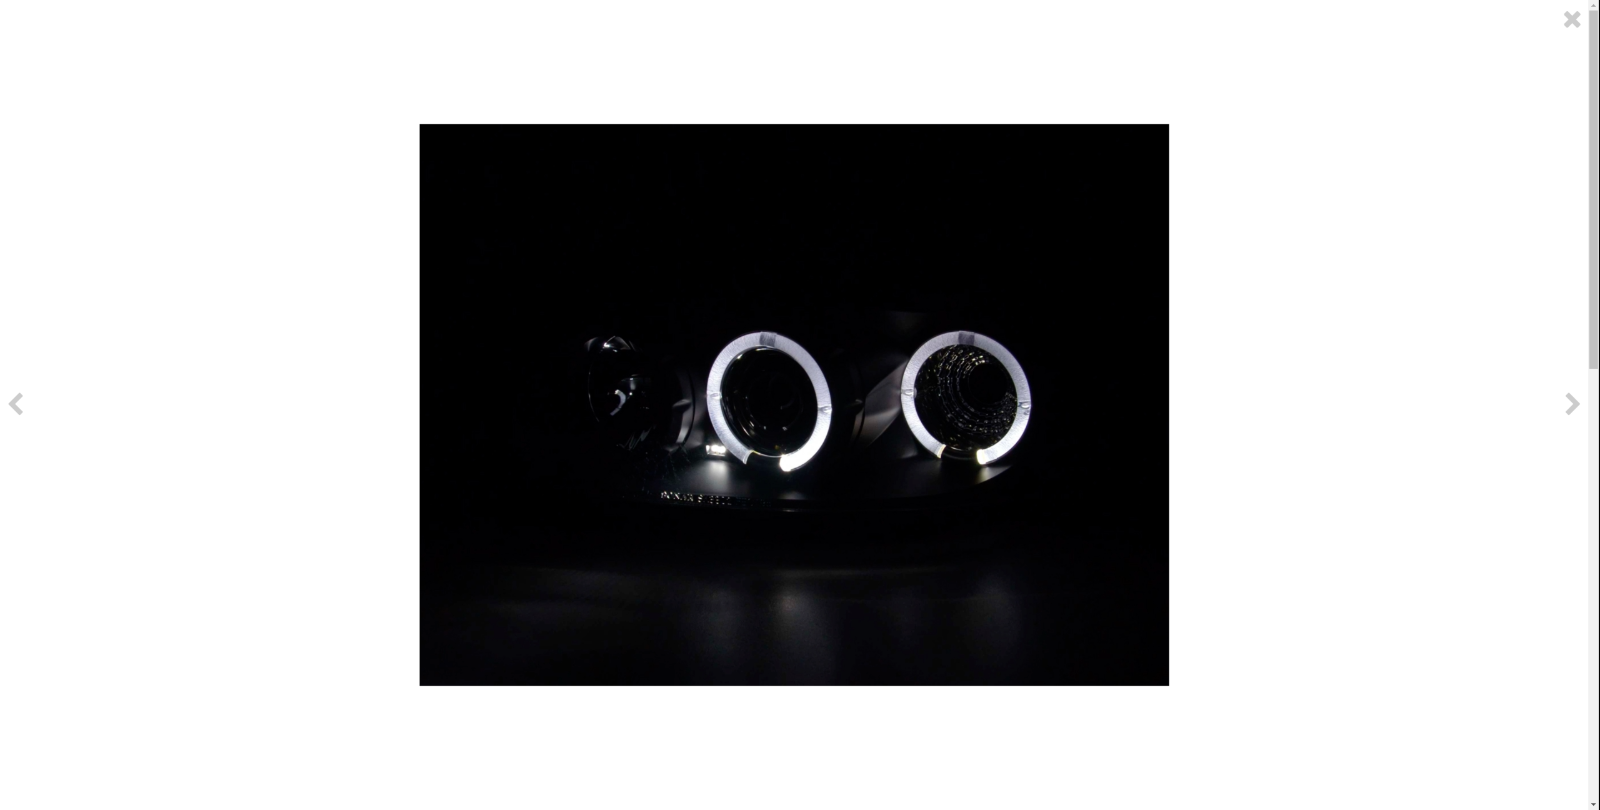 FK LED DRL Angel Eye Projector Headlight Ford Escort 6 MK6 95-04 black LHD